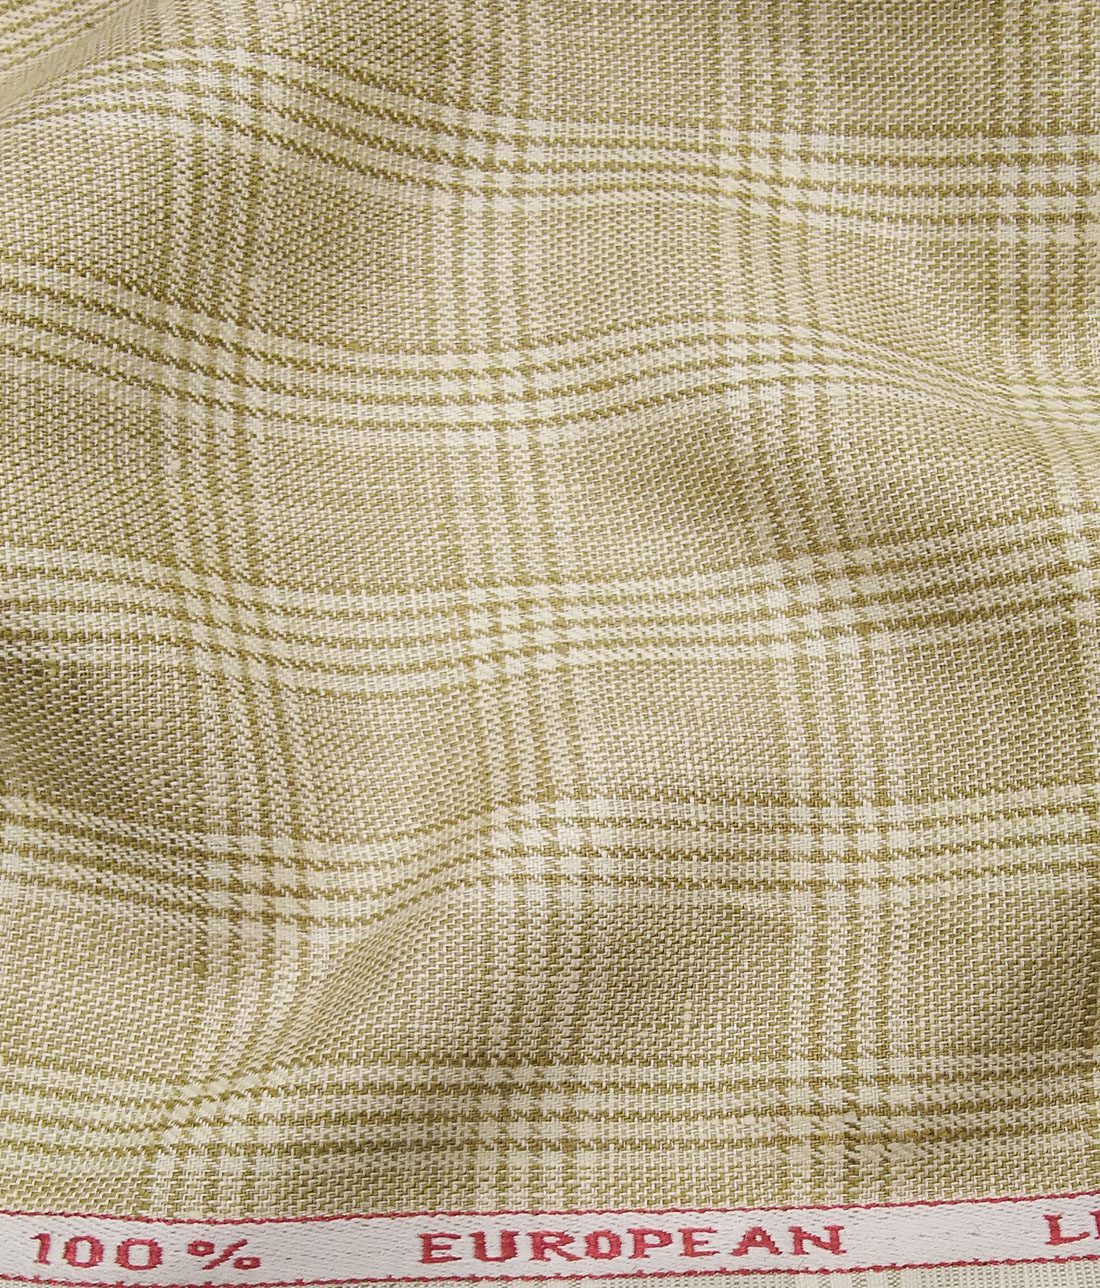 J.Hampstead Men's Beige Broad 40 LEA 100% European Linen Self Checks Unstitched Suiting Fabric (3 Meter)